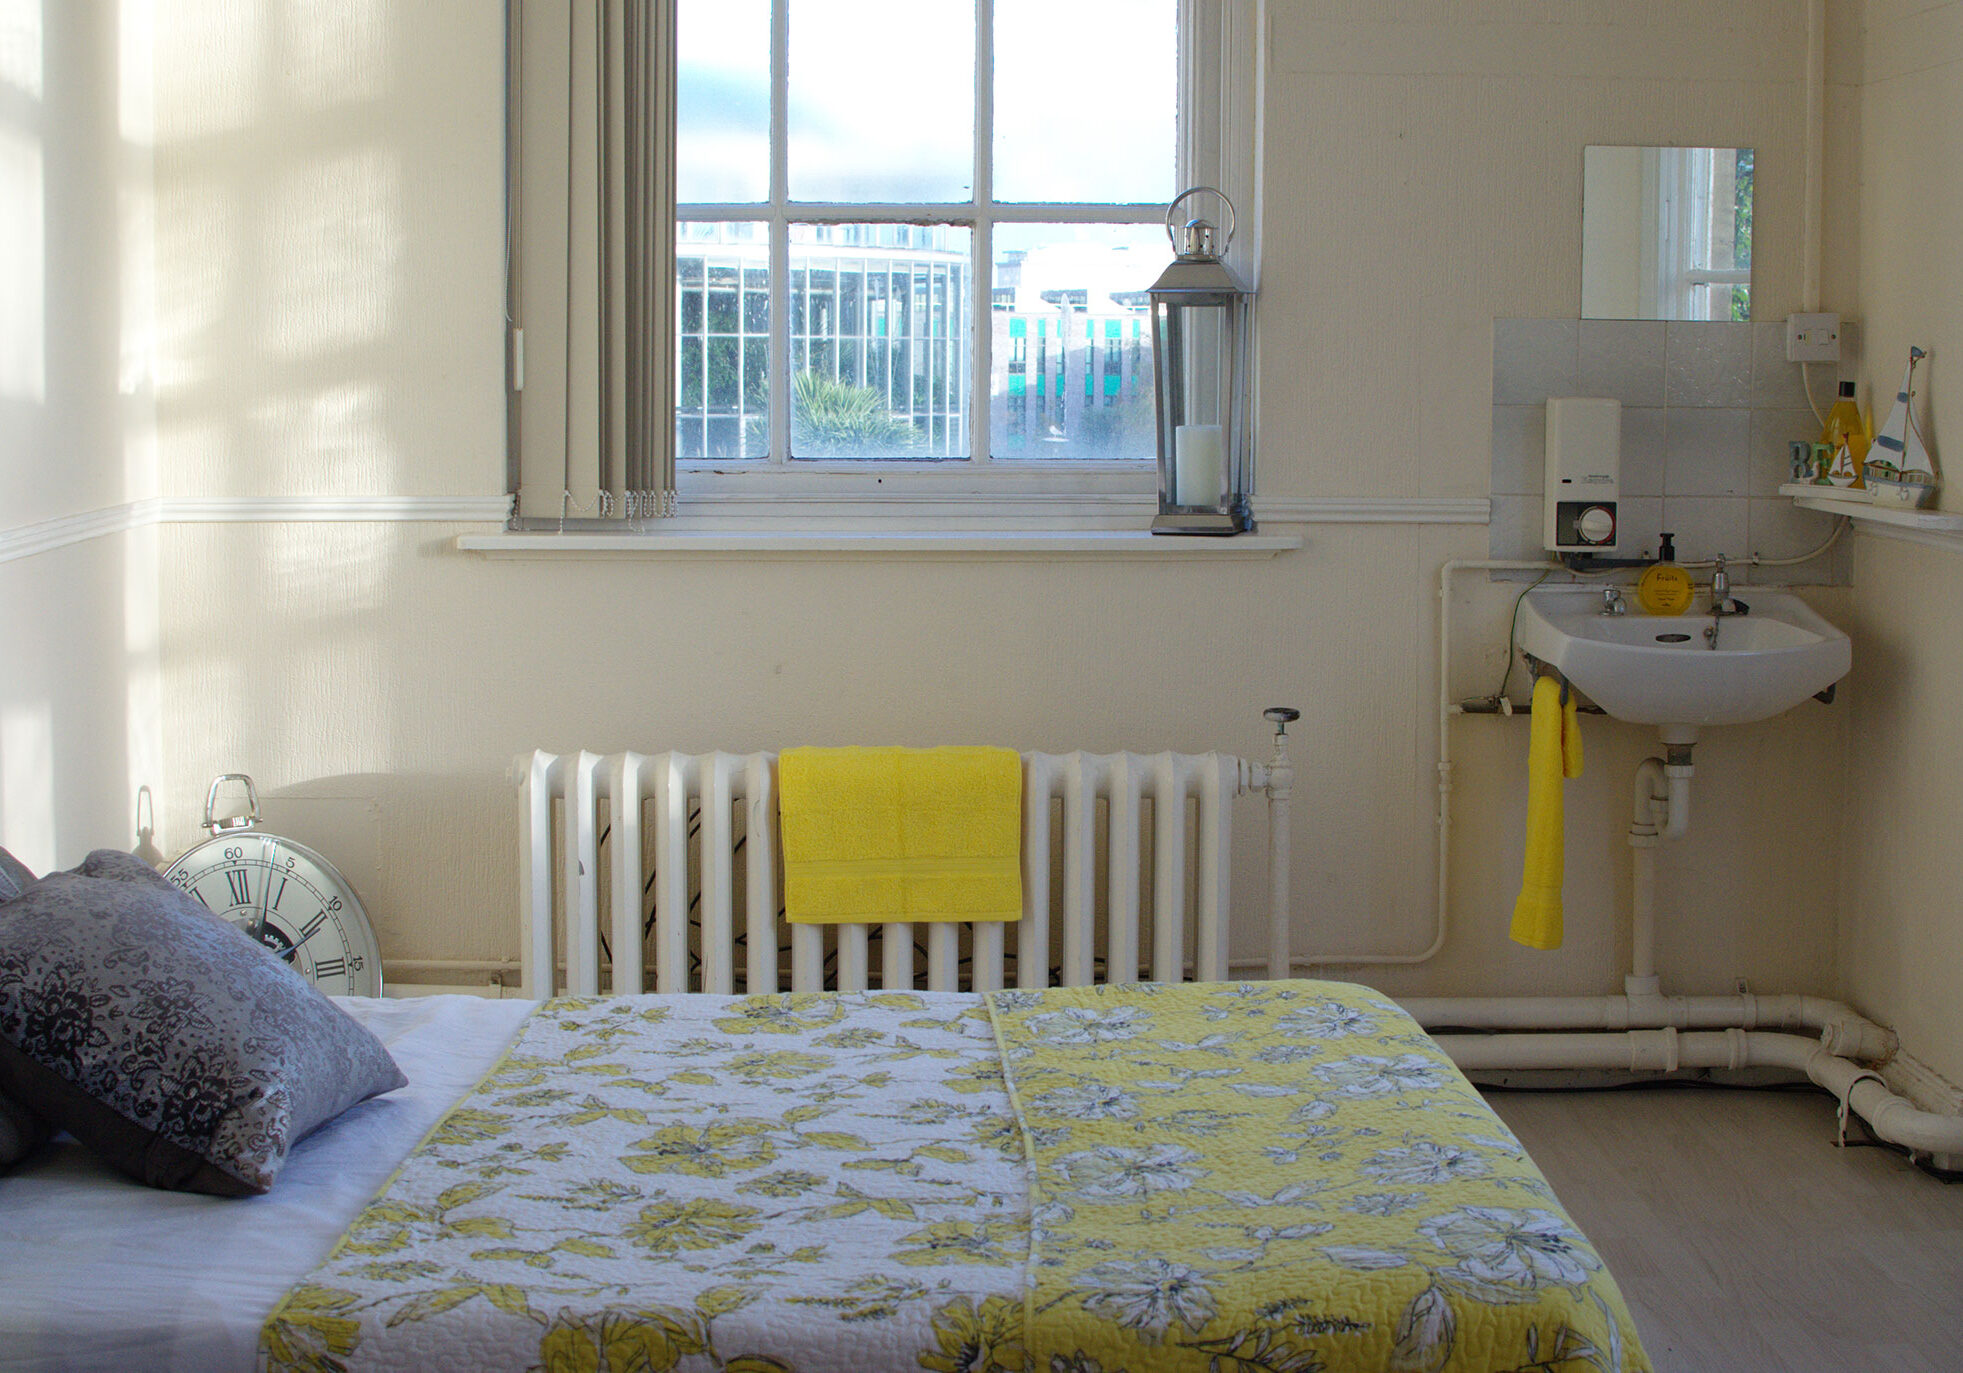 Student Rooms for Rent Sunderland